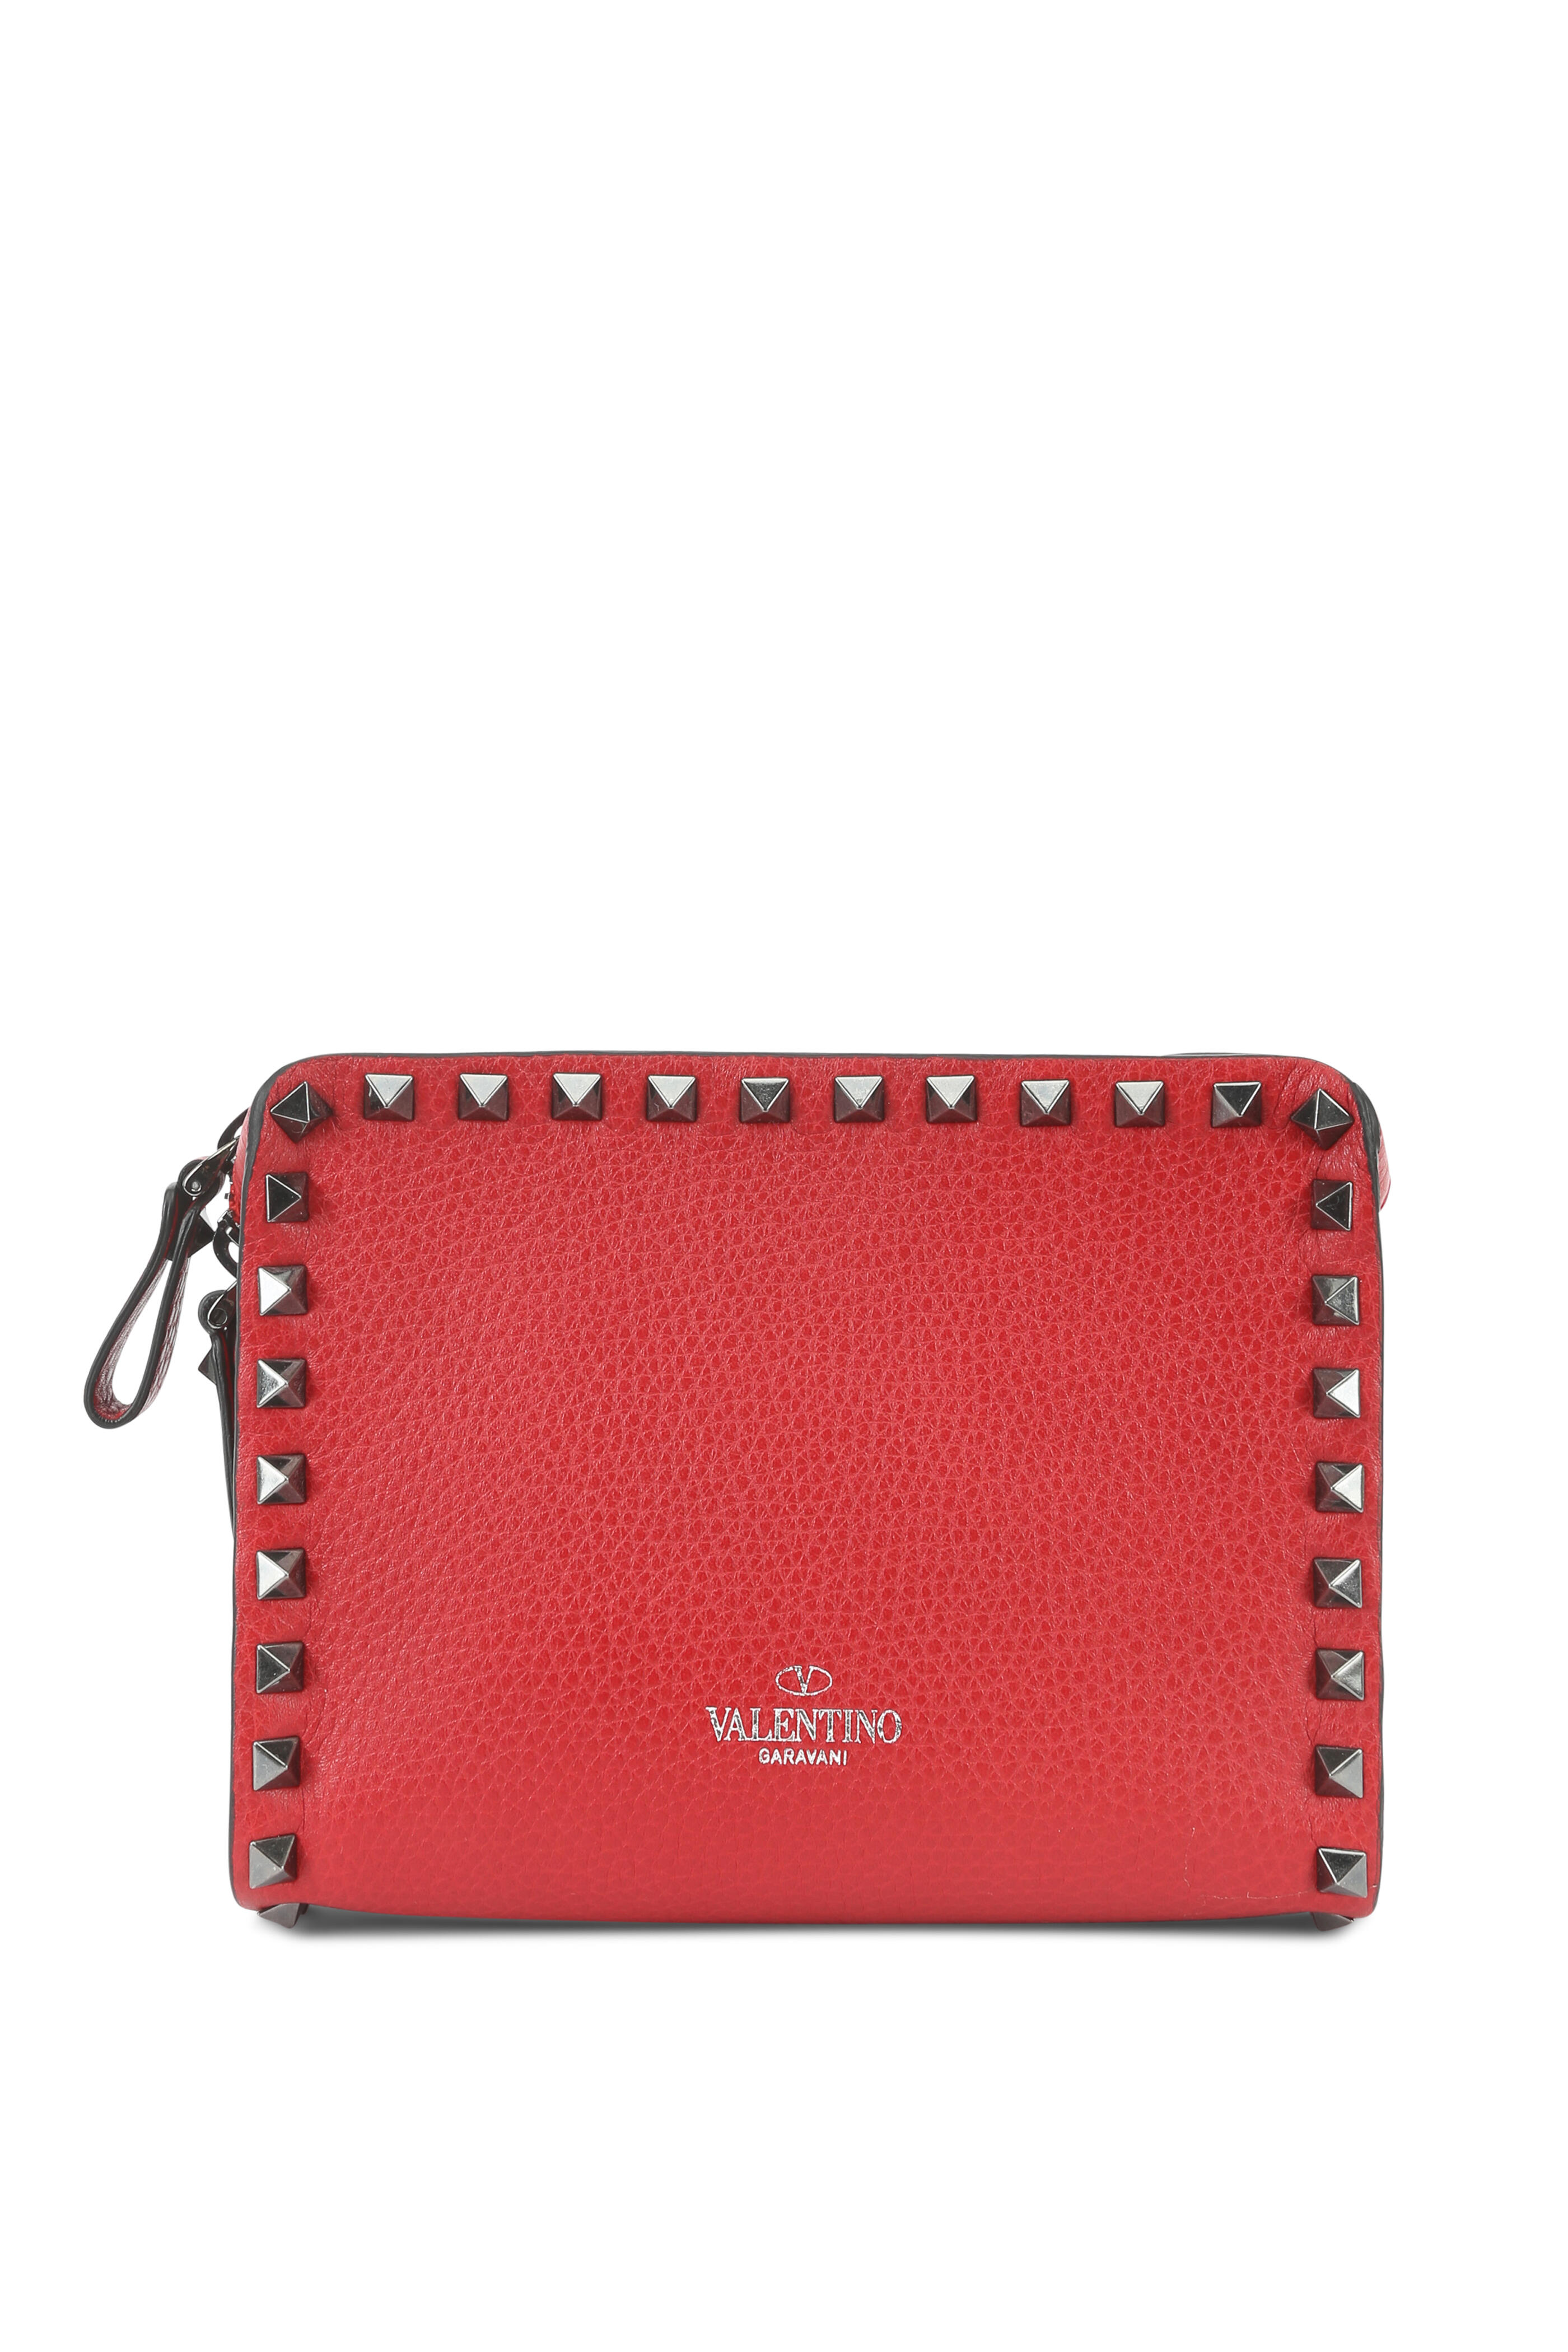 Valentino Garavani - Rockstud Red Leather Front Pocket